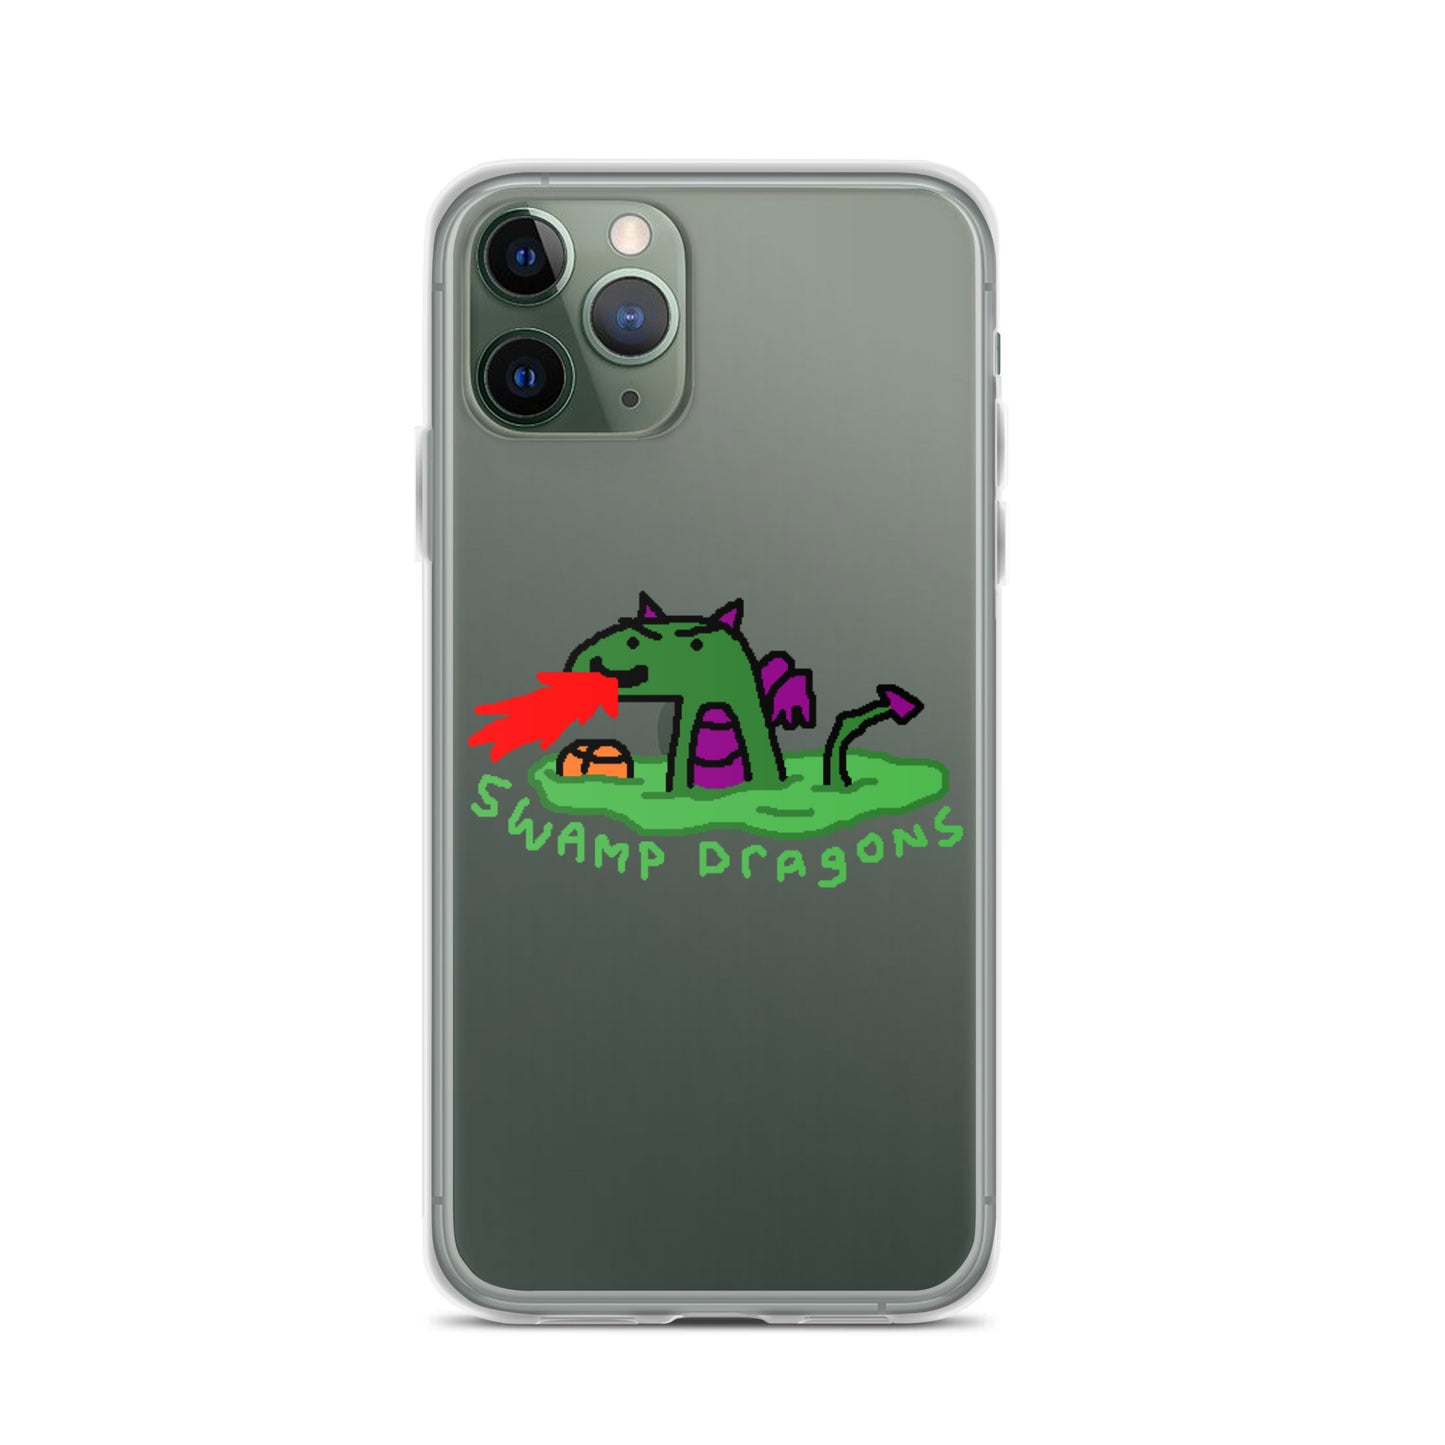 Swamp Dragon Phone Case